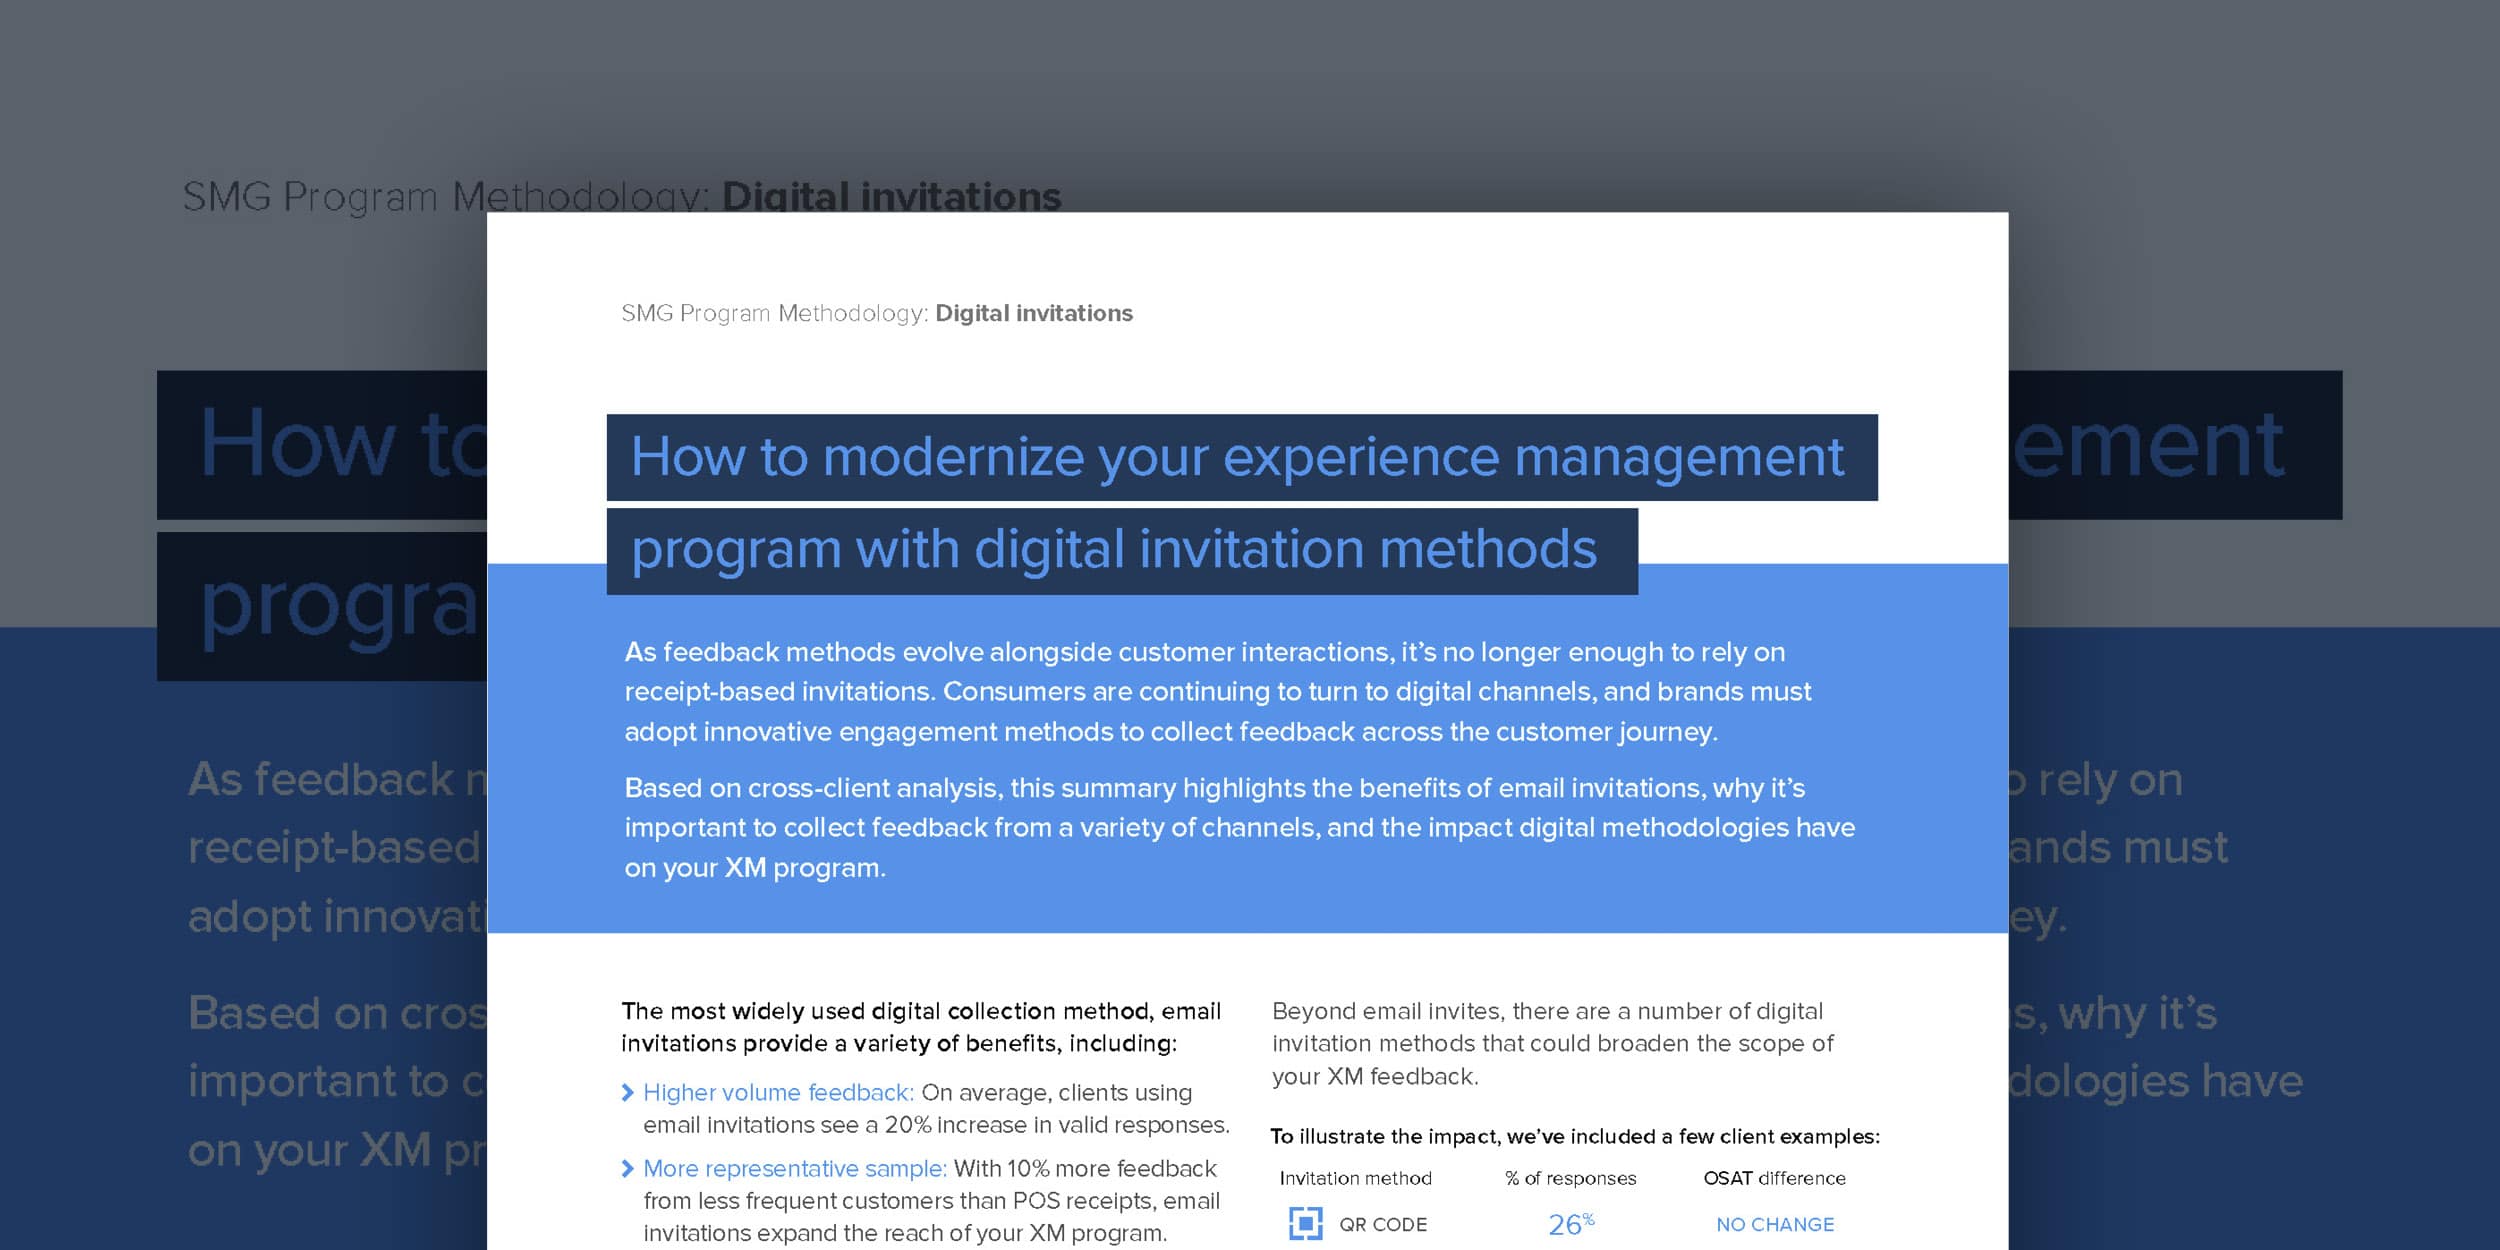 XM Program Guide: Digital Invitations 